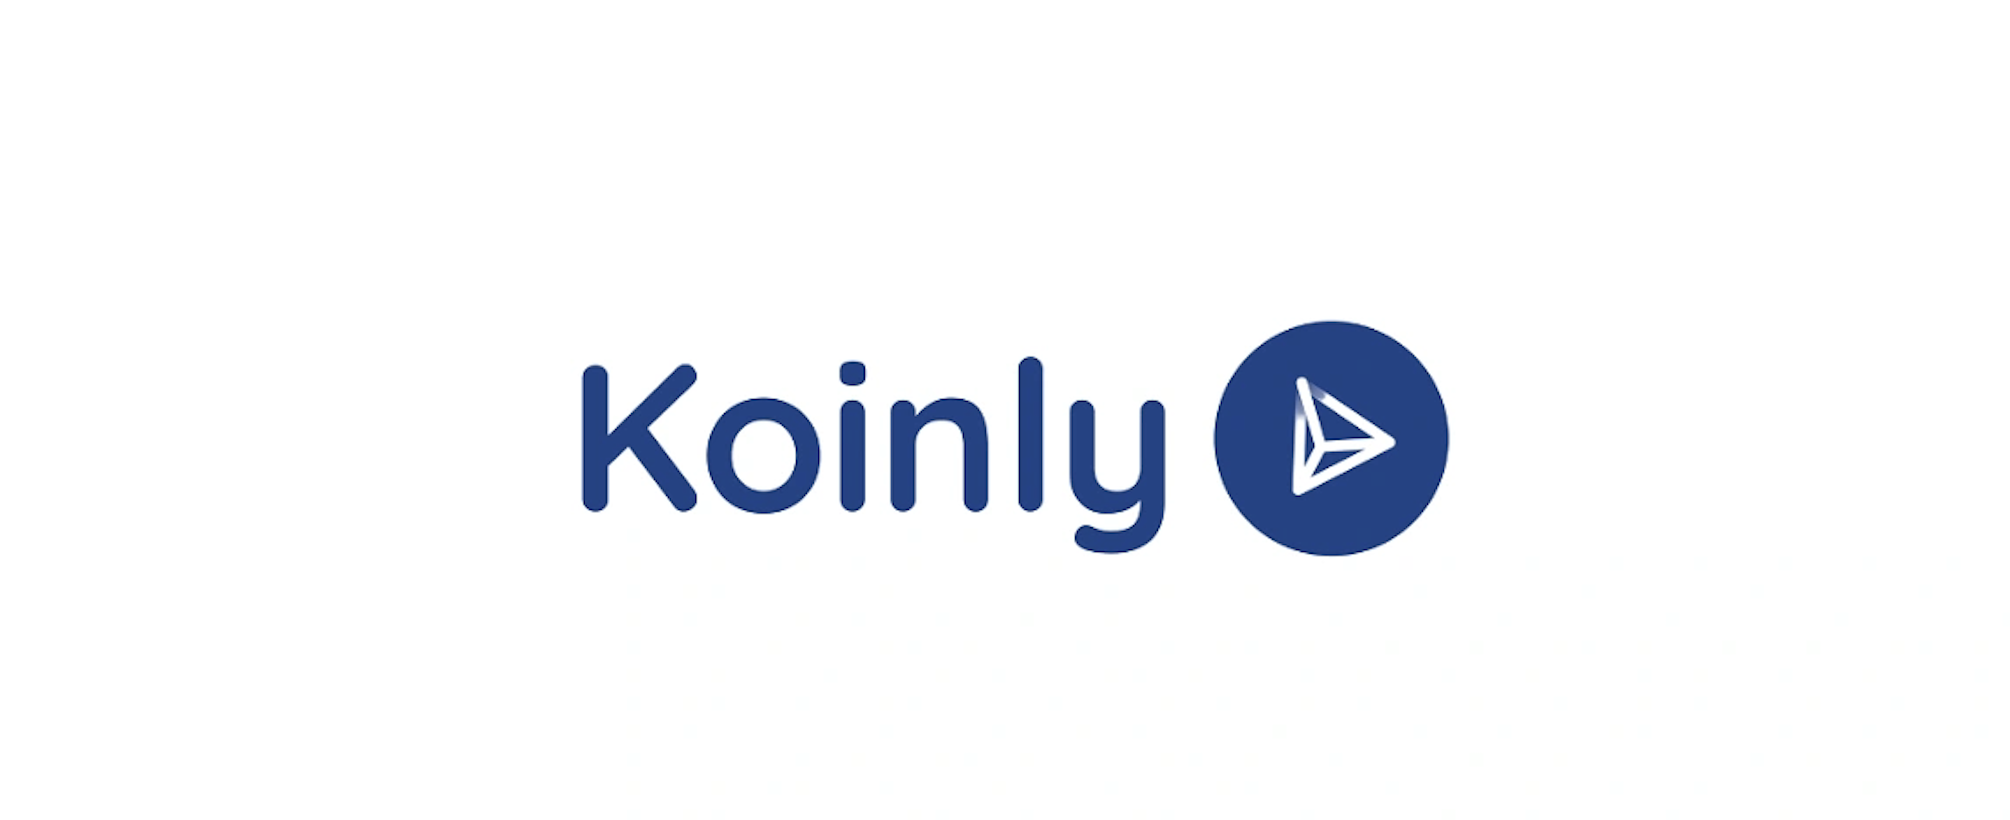 Manage your portfolio and crypto taxes using Koinly